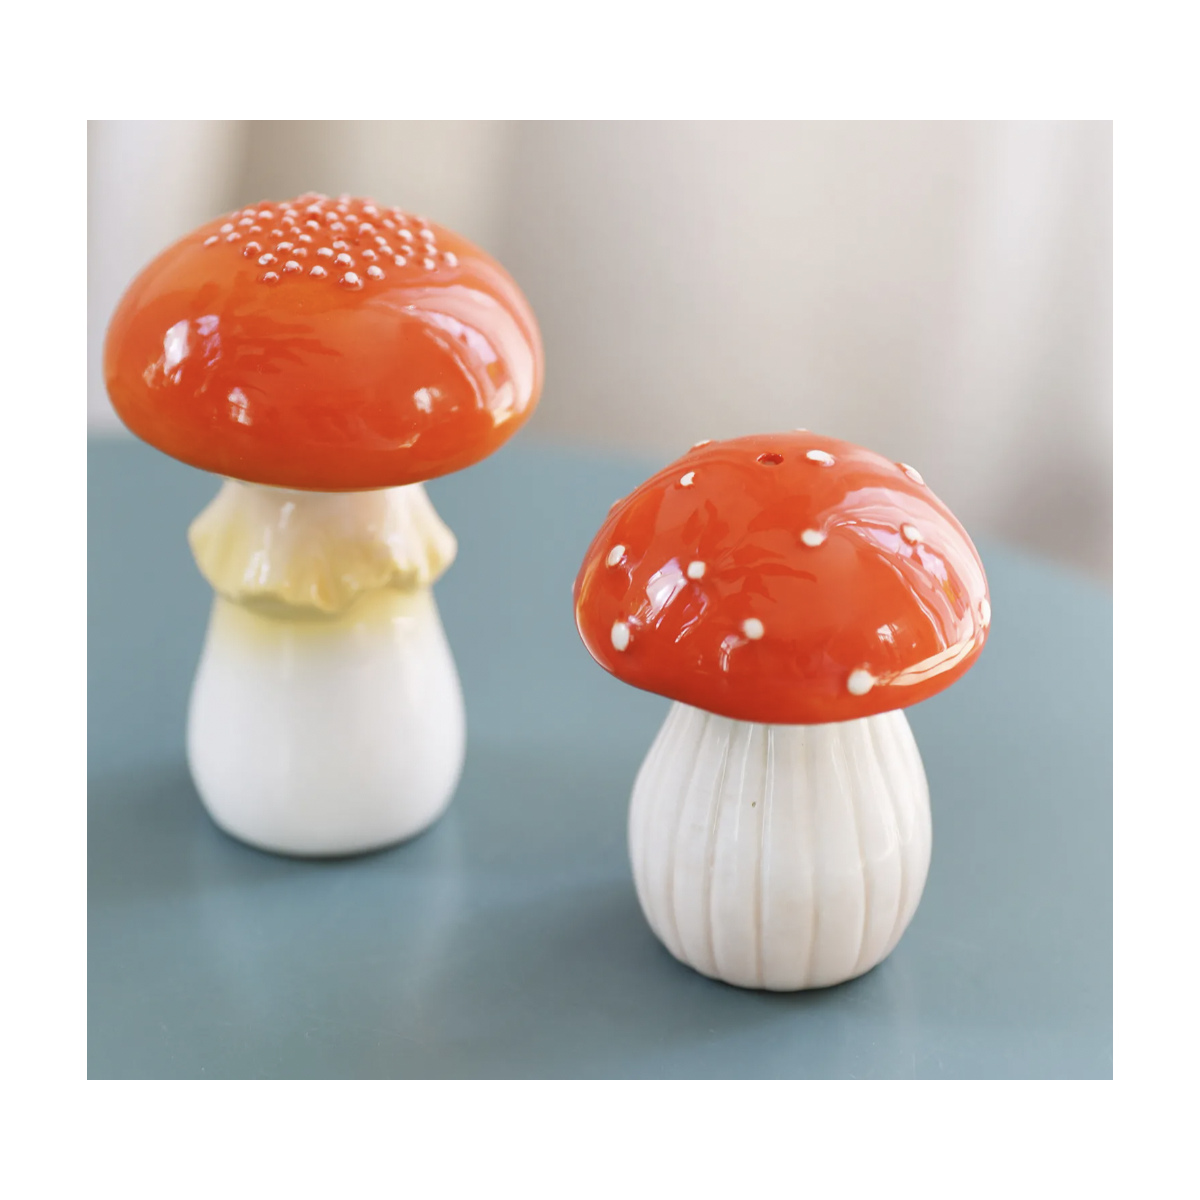 Salt & pepper mushroom